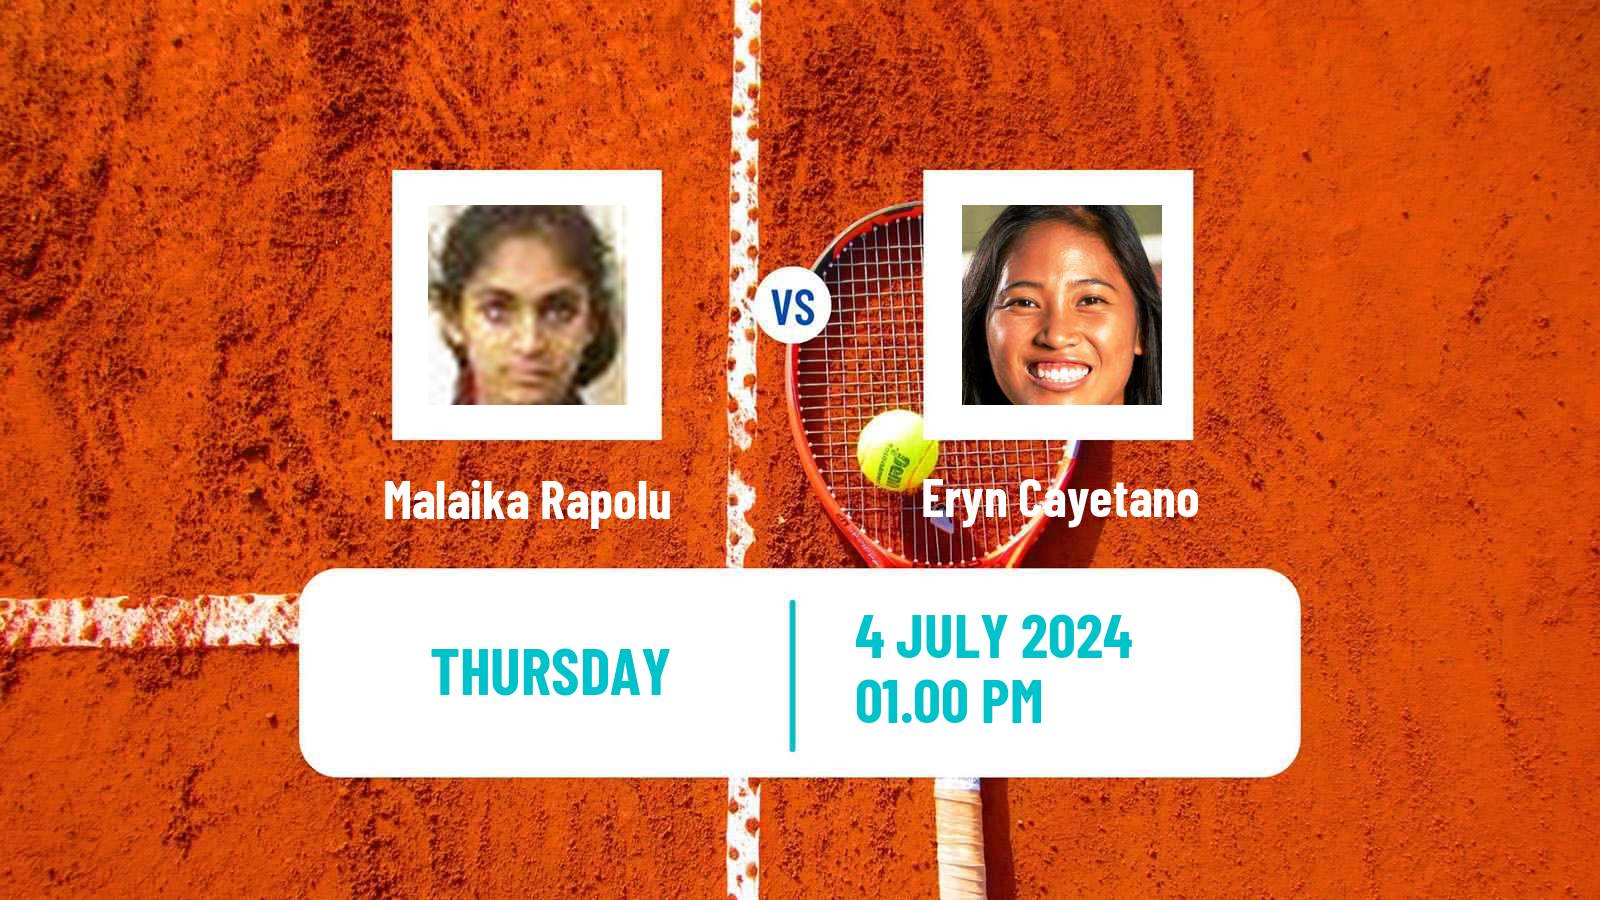 Tennis ITF W15 Lakewood Ca Women Malaika Rapolu - Eryn Cayetano